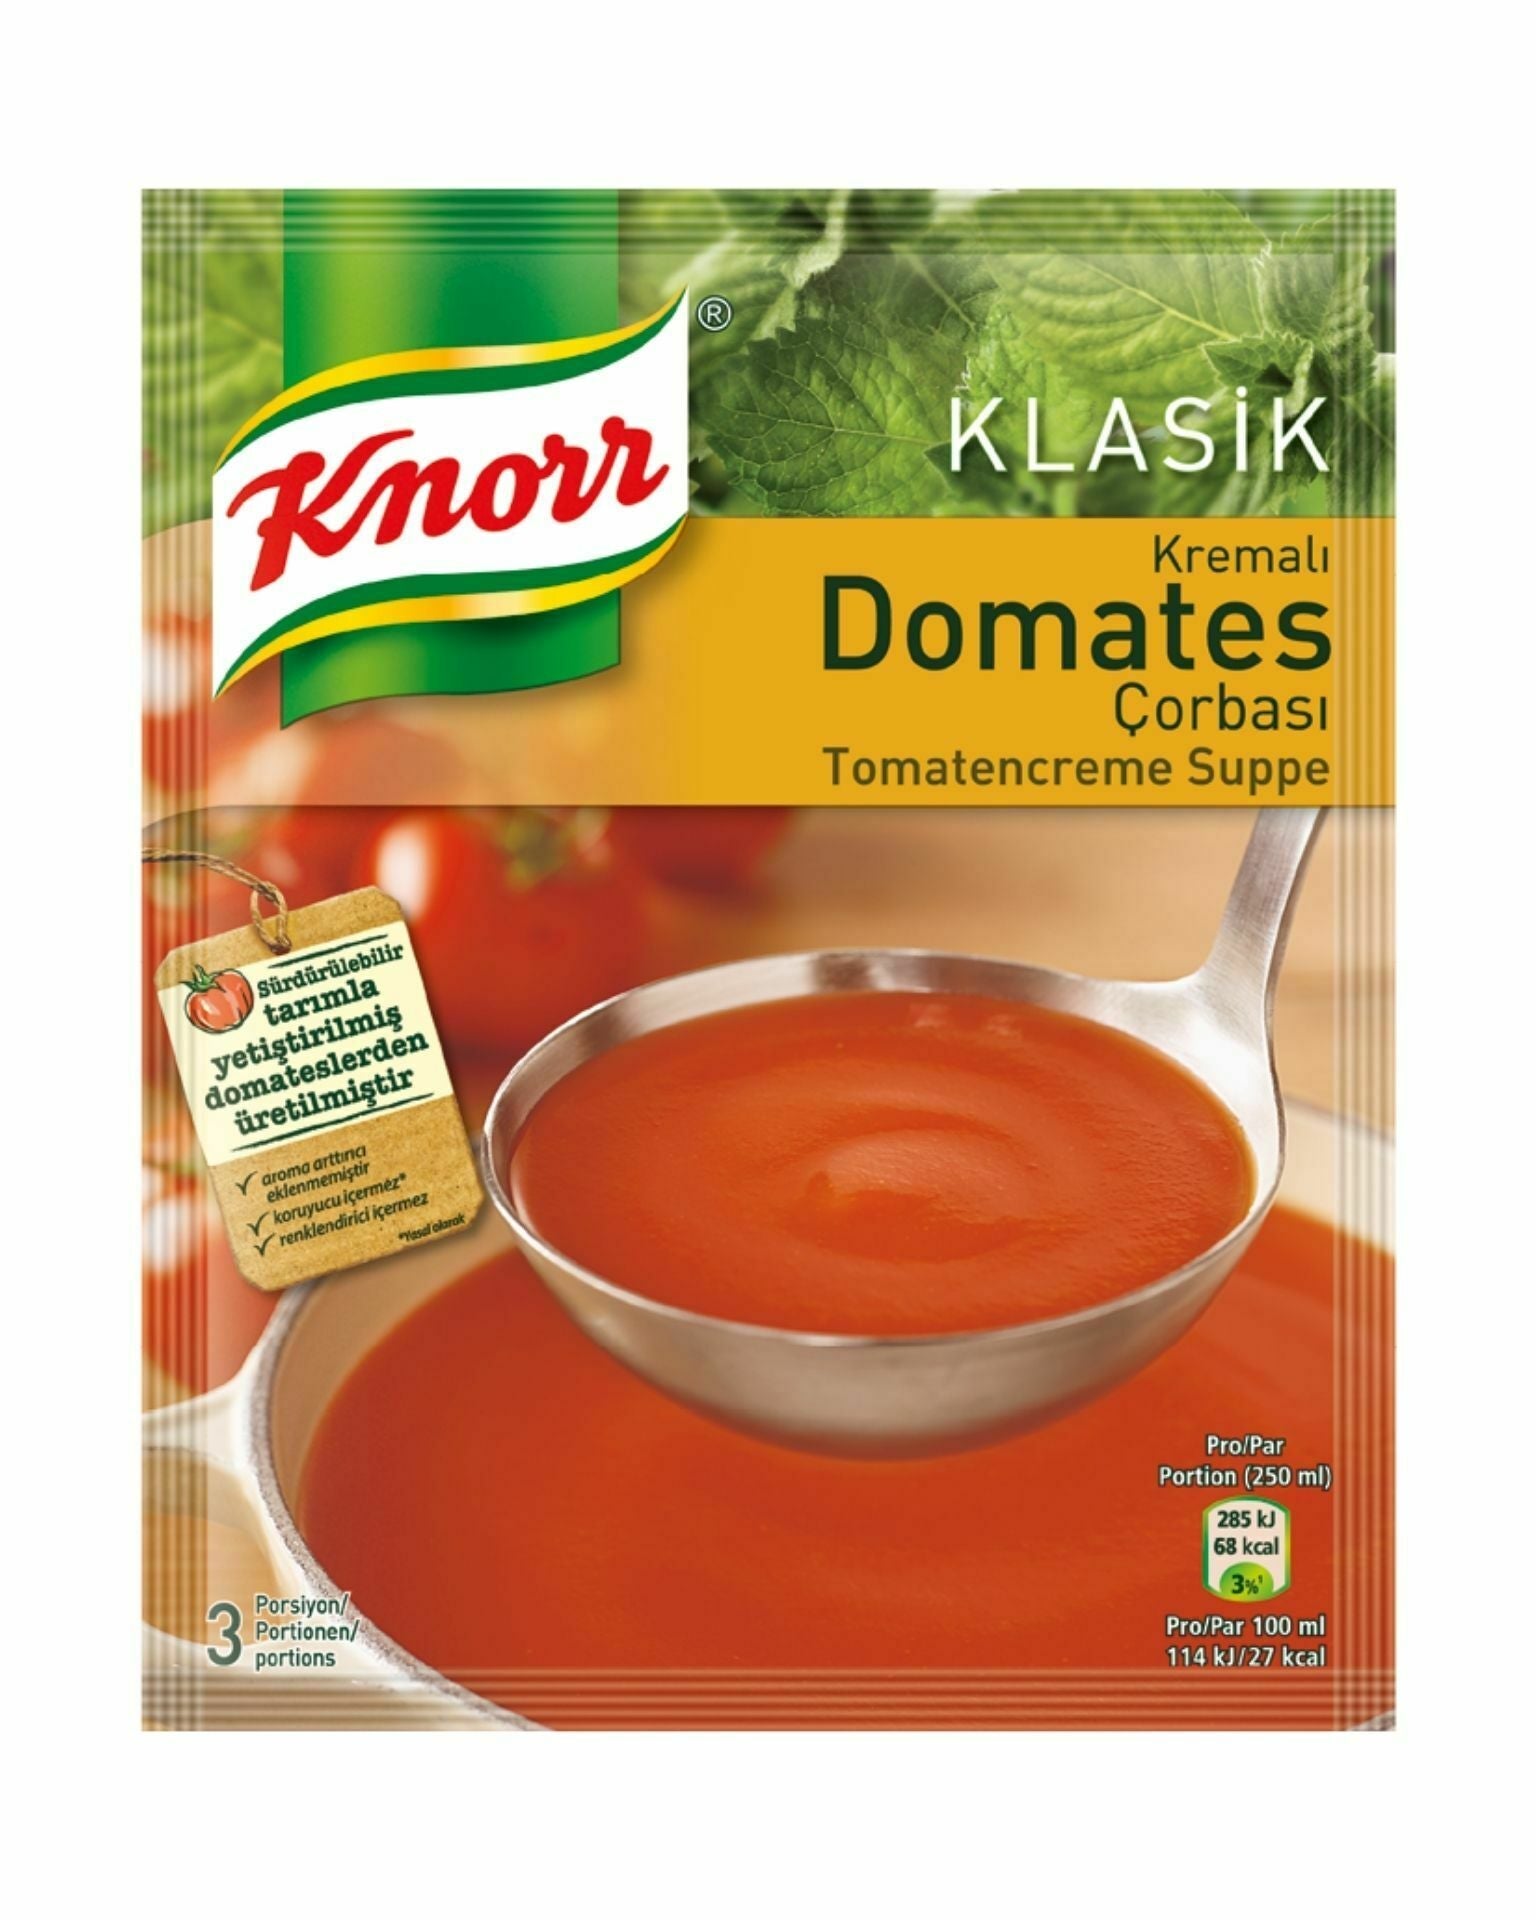 Knorr Kremali Domates Corbasi Cream Tomato Soup (62 G) - Aytac Foods